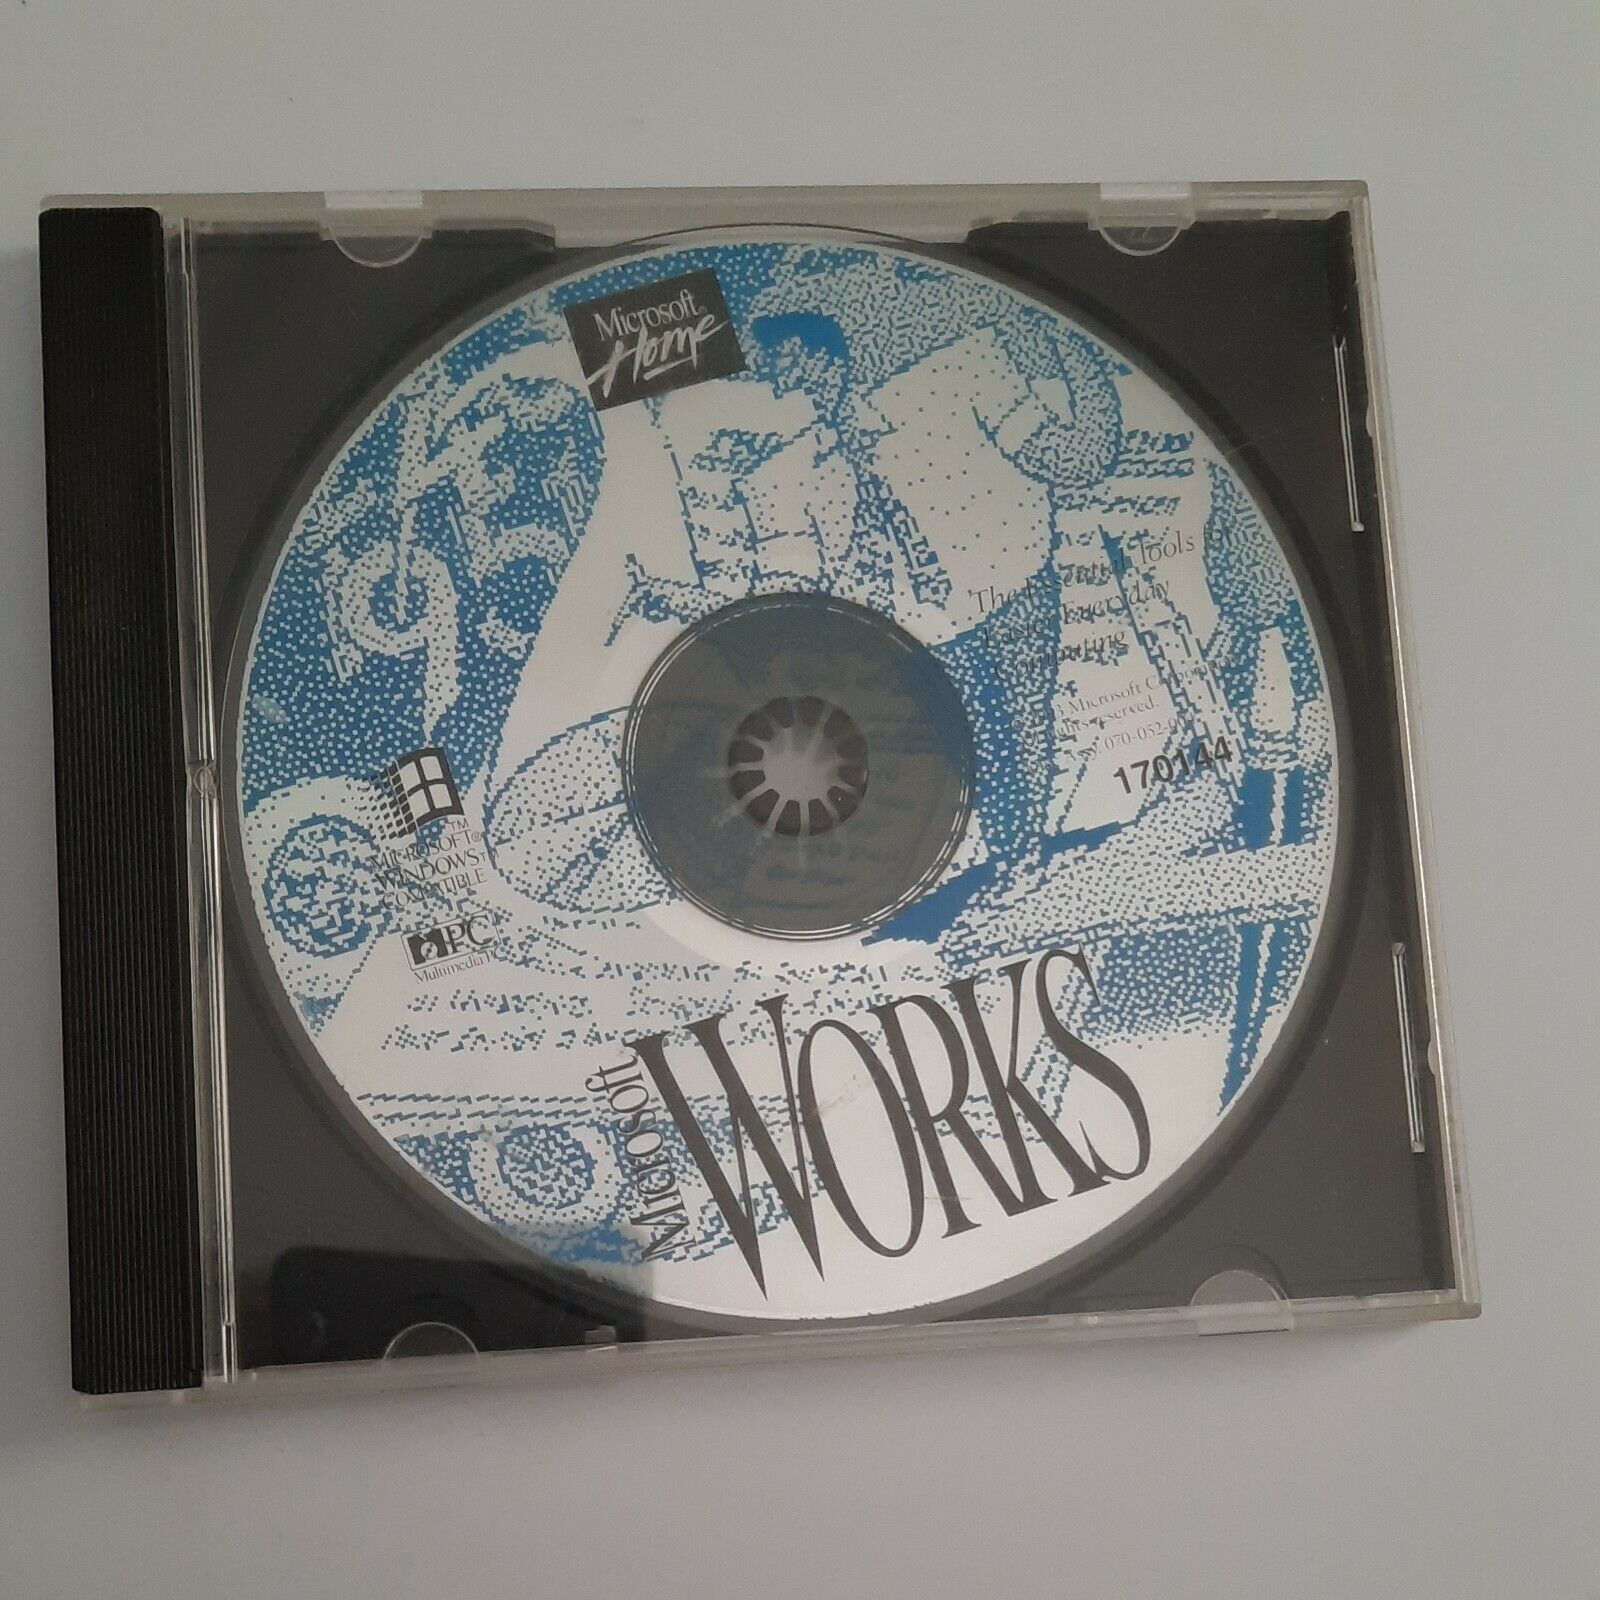 Microsoft Works (170144)(Microsoft Corporation)(Microsoft Home)(1993)